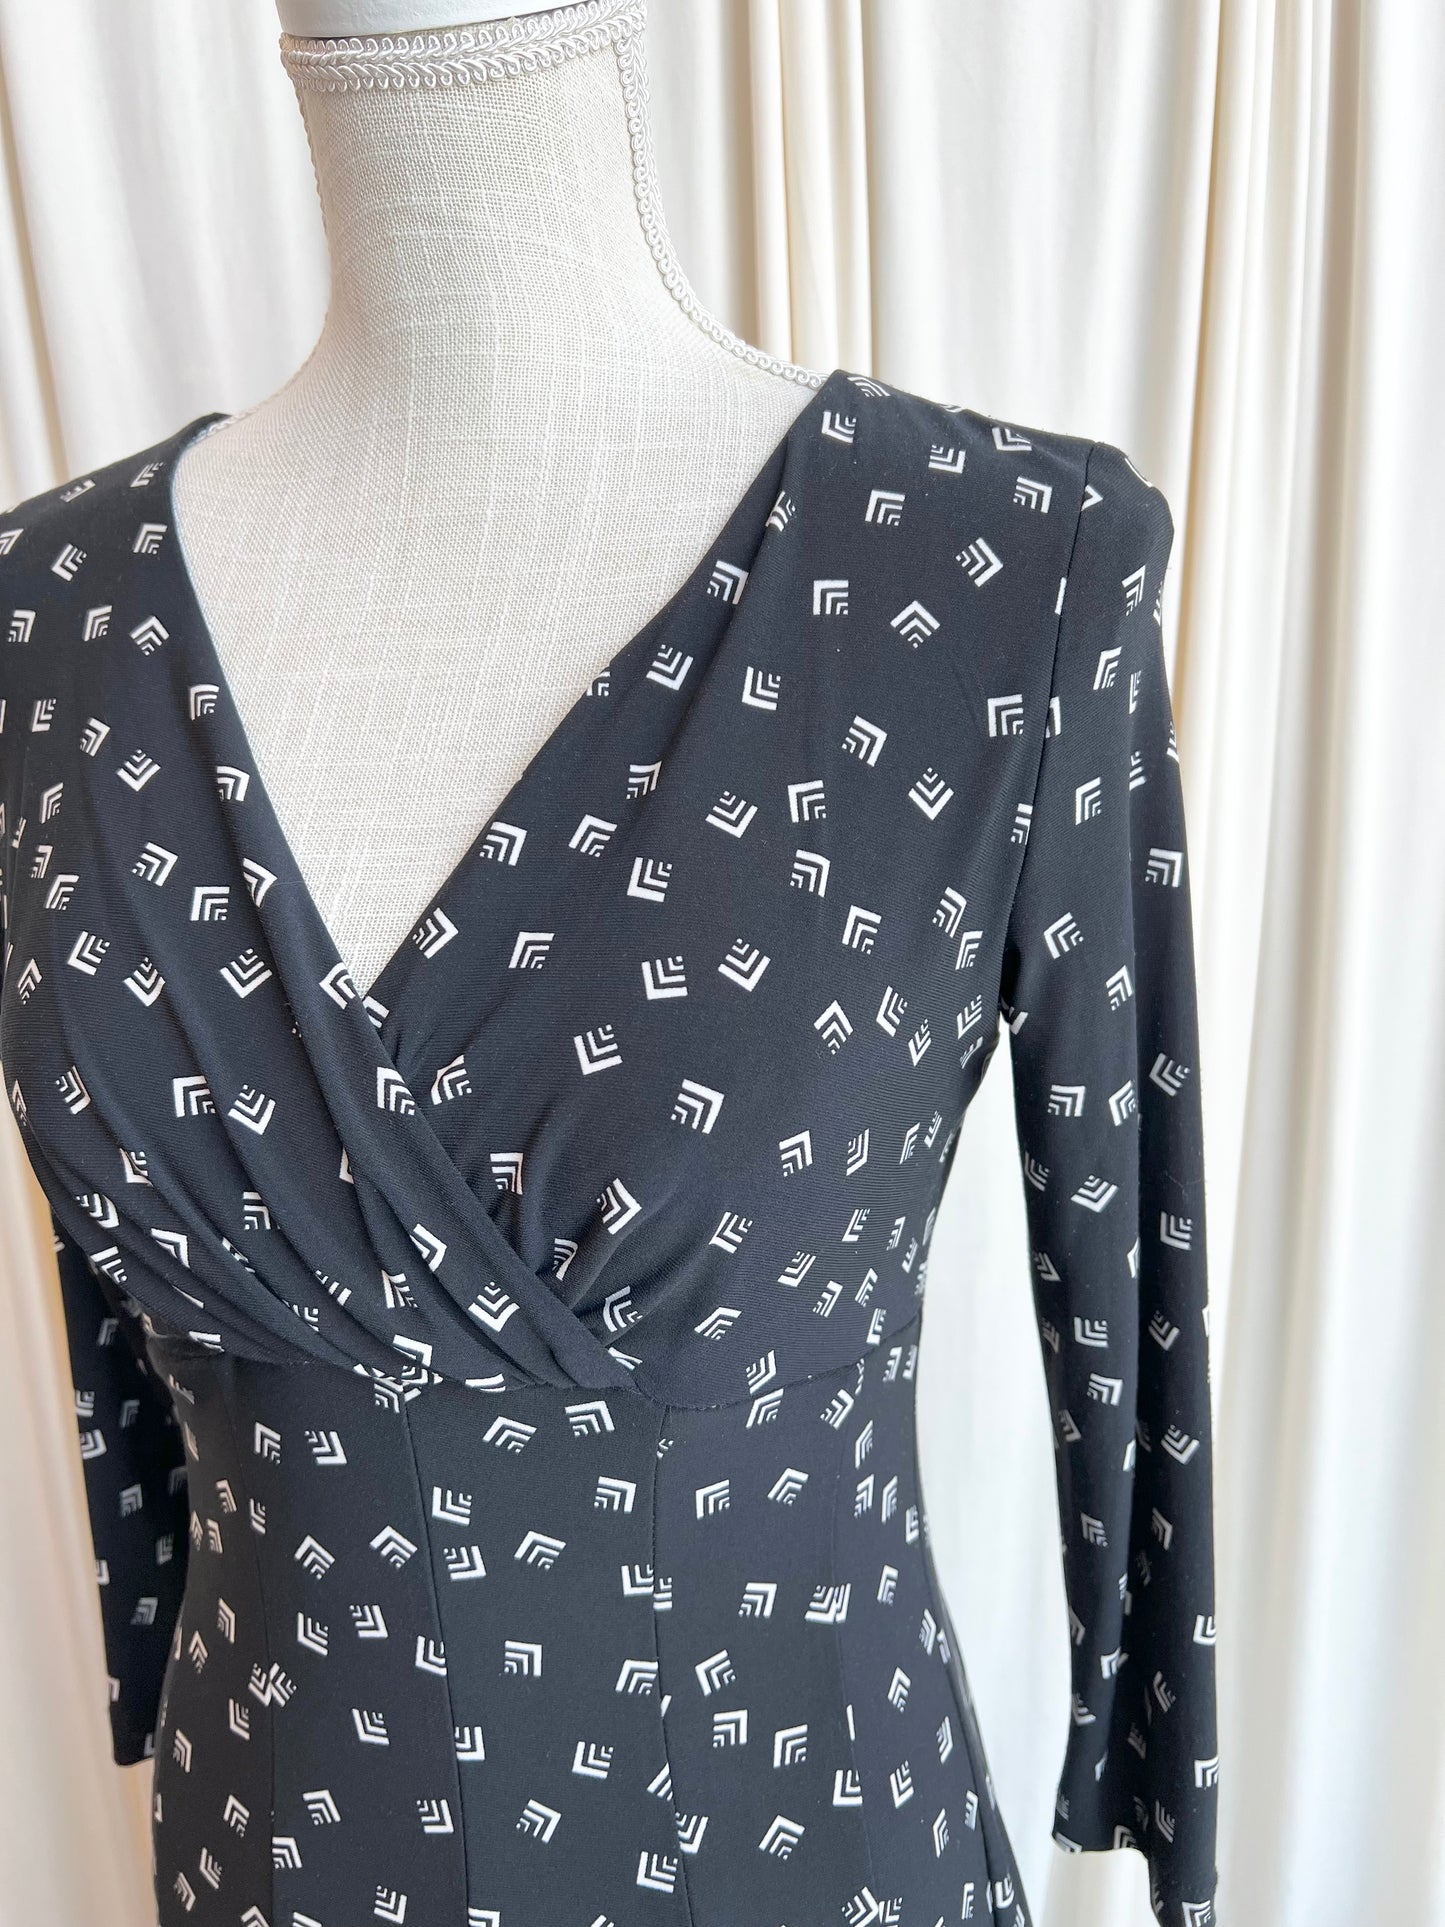 Black Geometric Patterned Dress - Small